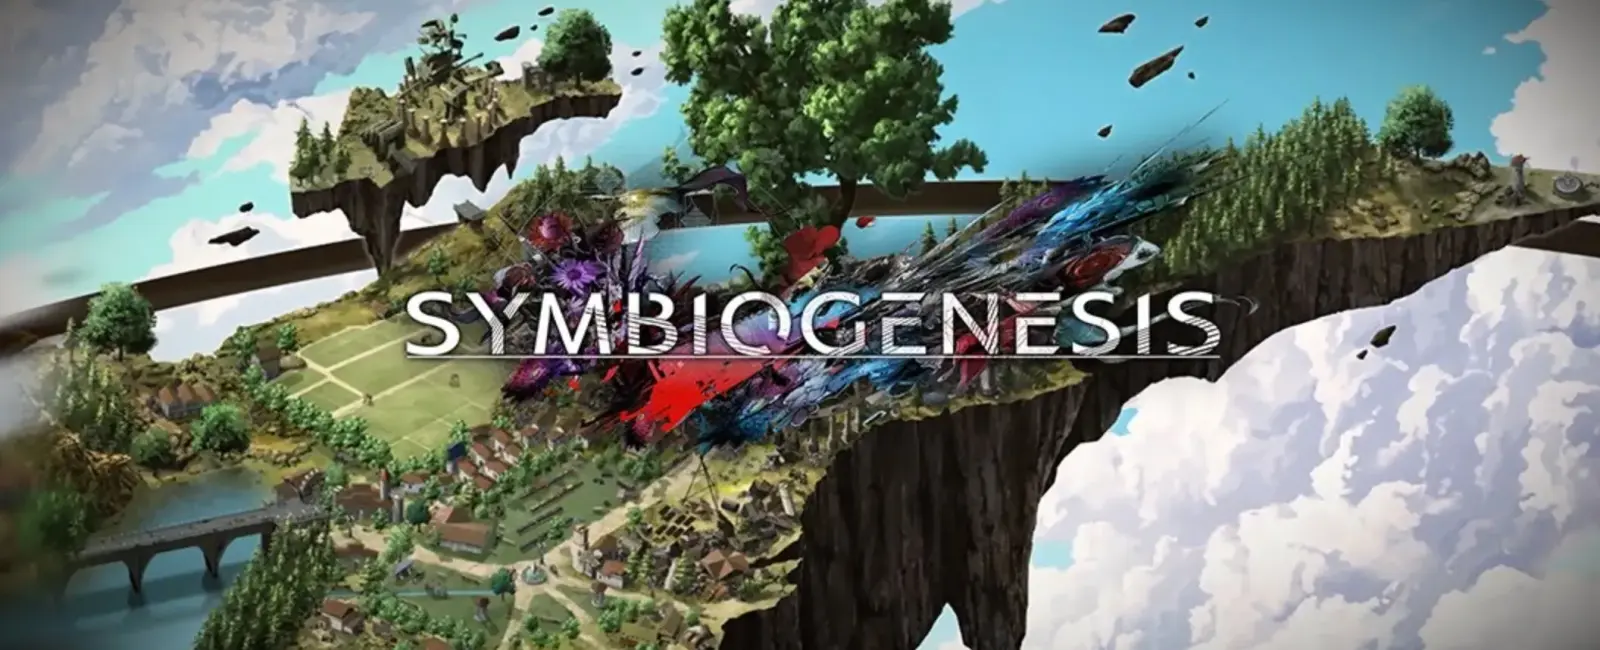 Square Enix partners with Animoca Brands to enhance 'Symbiogenesis’